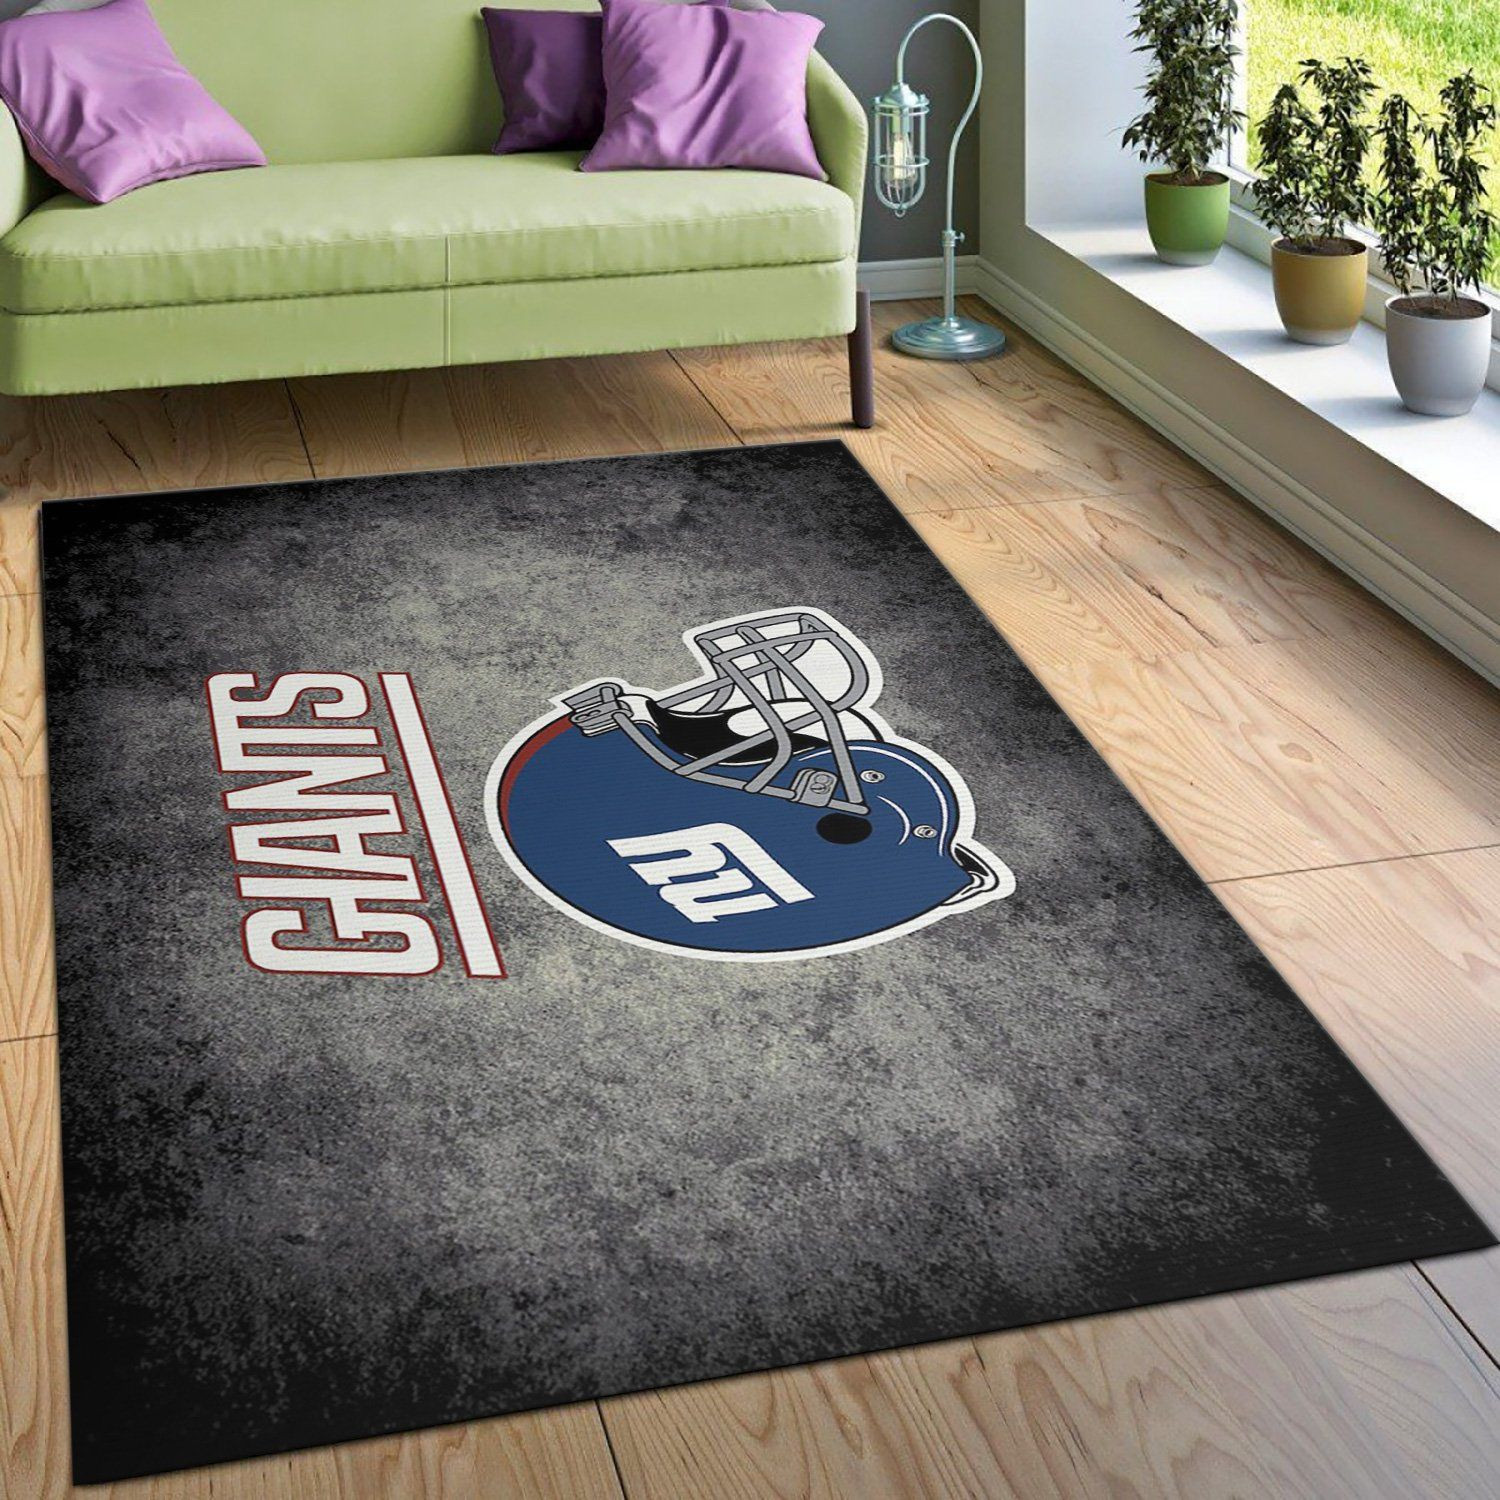 New York Giants Imperial Distressed Rug NFL Area Rug Carpet, Bedroom, Home Decor Floor Decor - Indoor Outdoor Rugs